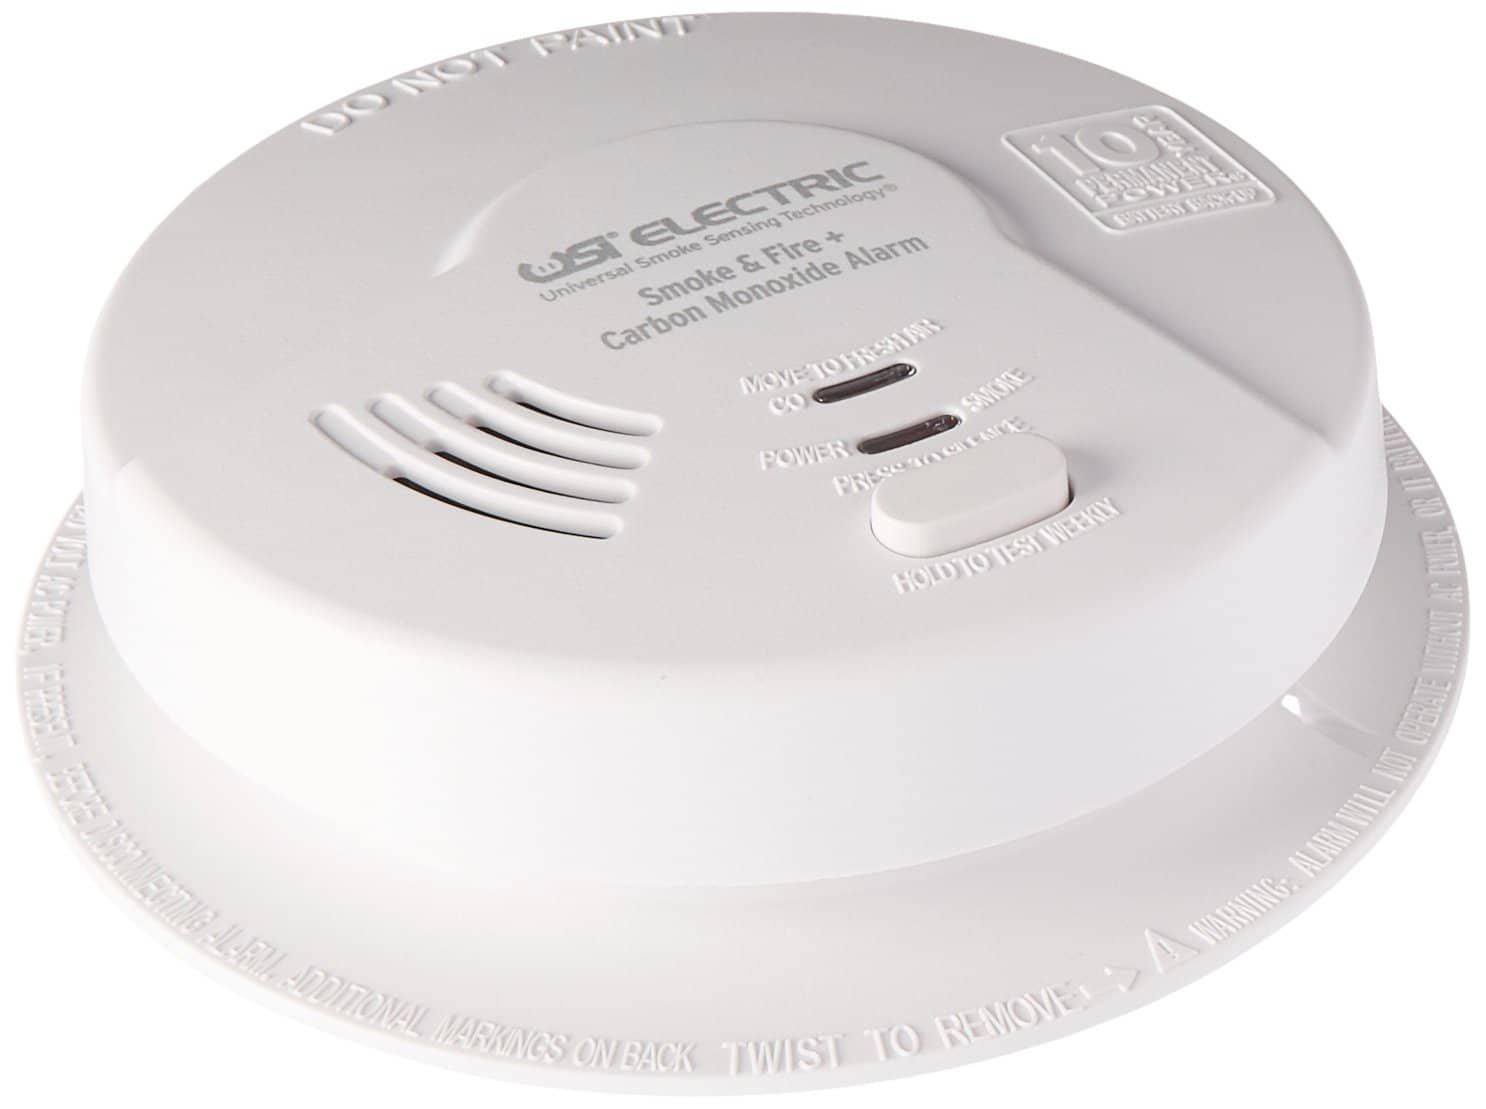 Universal Security Instruments Smoke Sensing & Carbon Monoxide Alarm